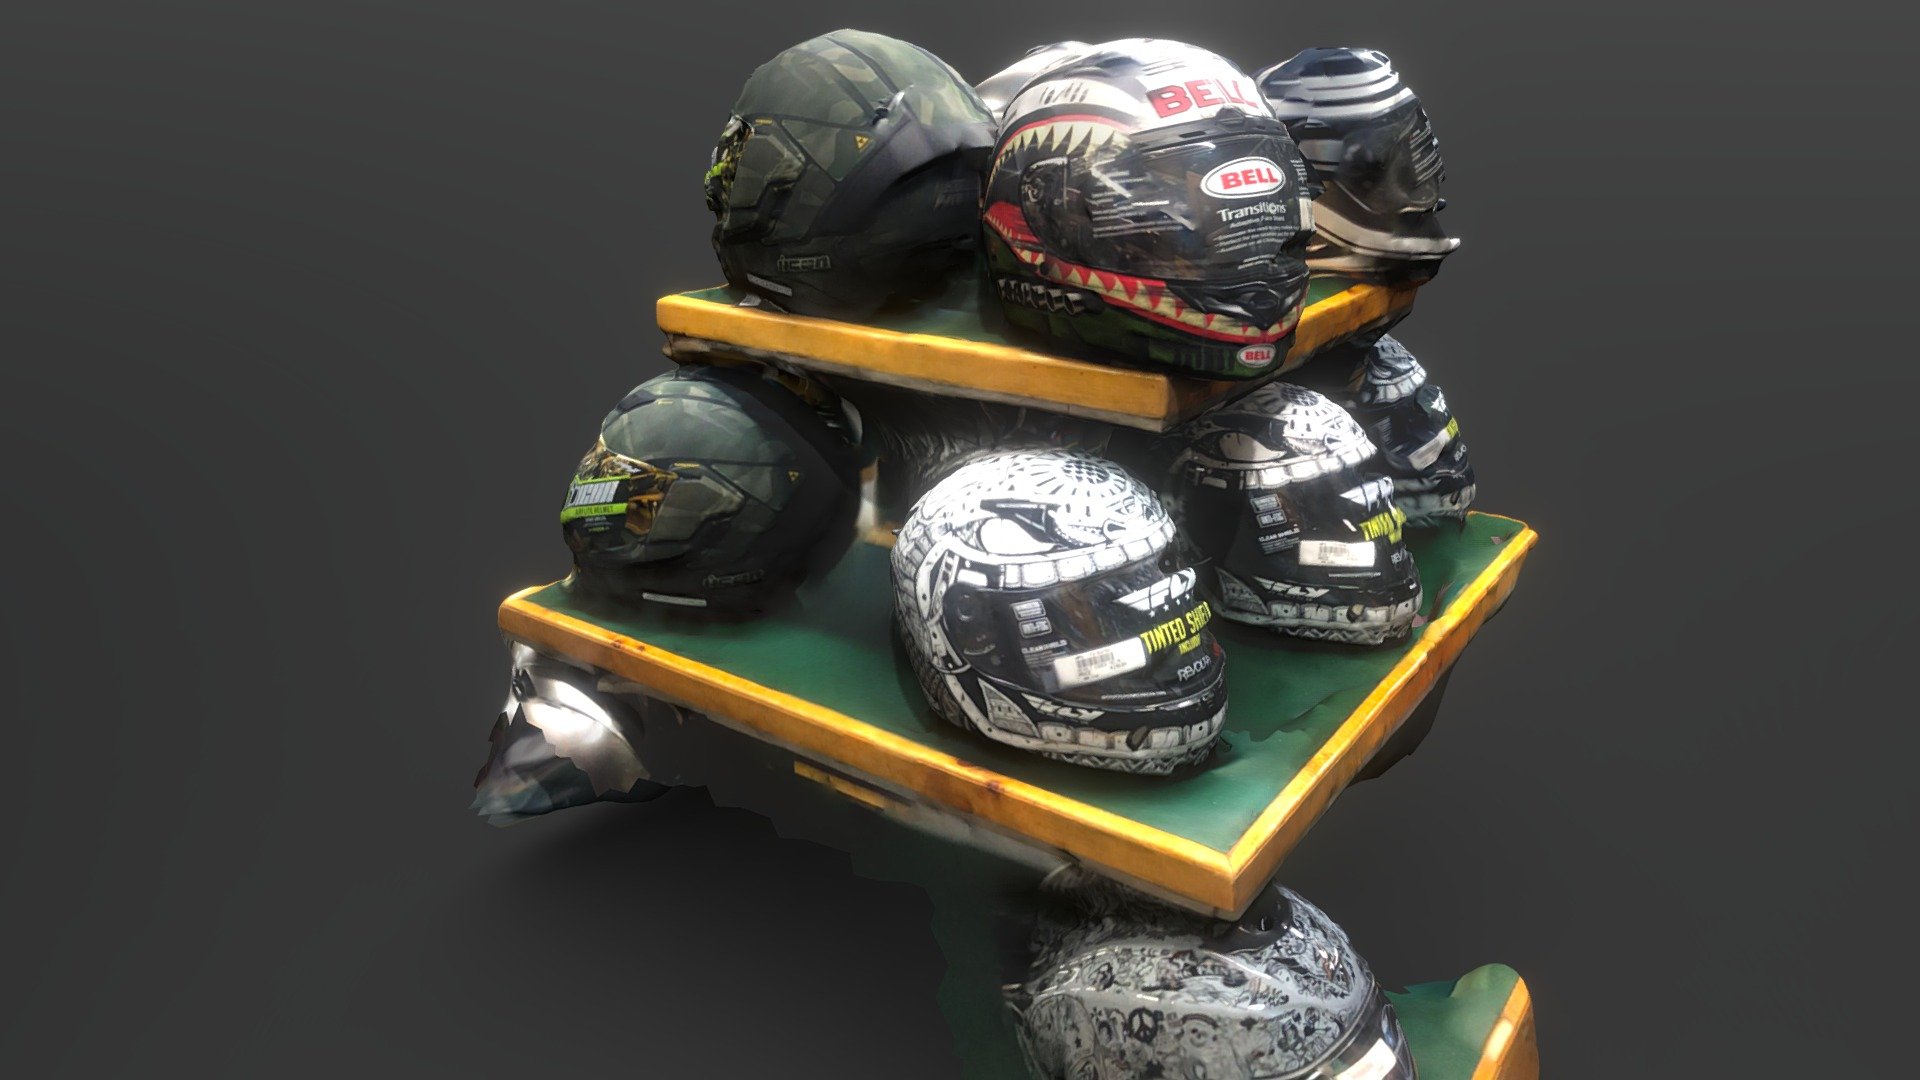 AR Quick test of helmets